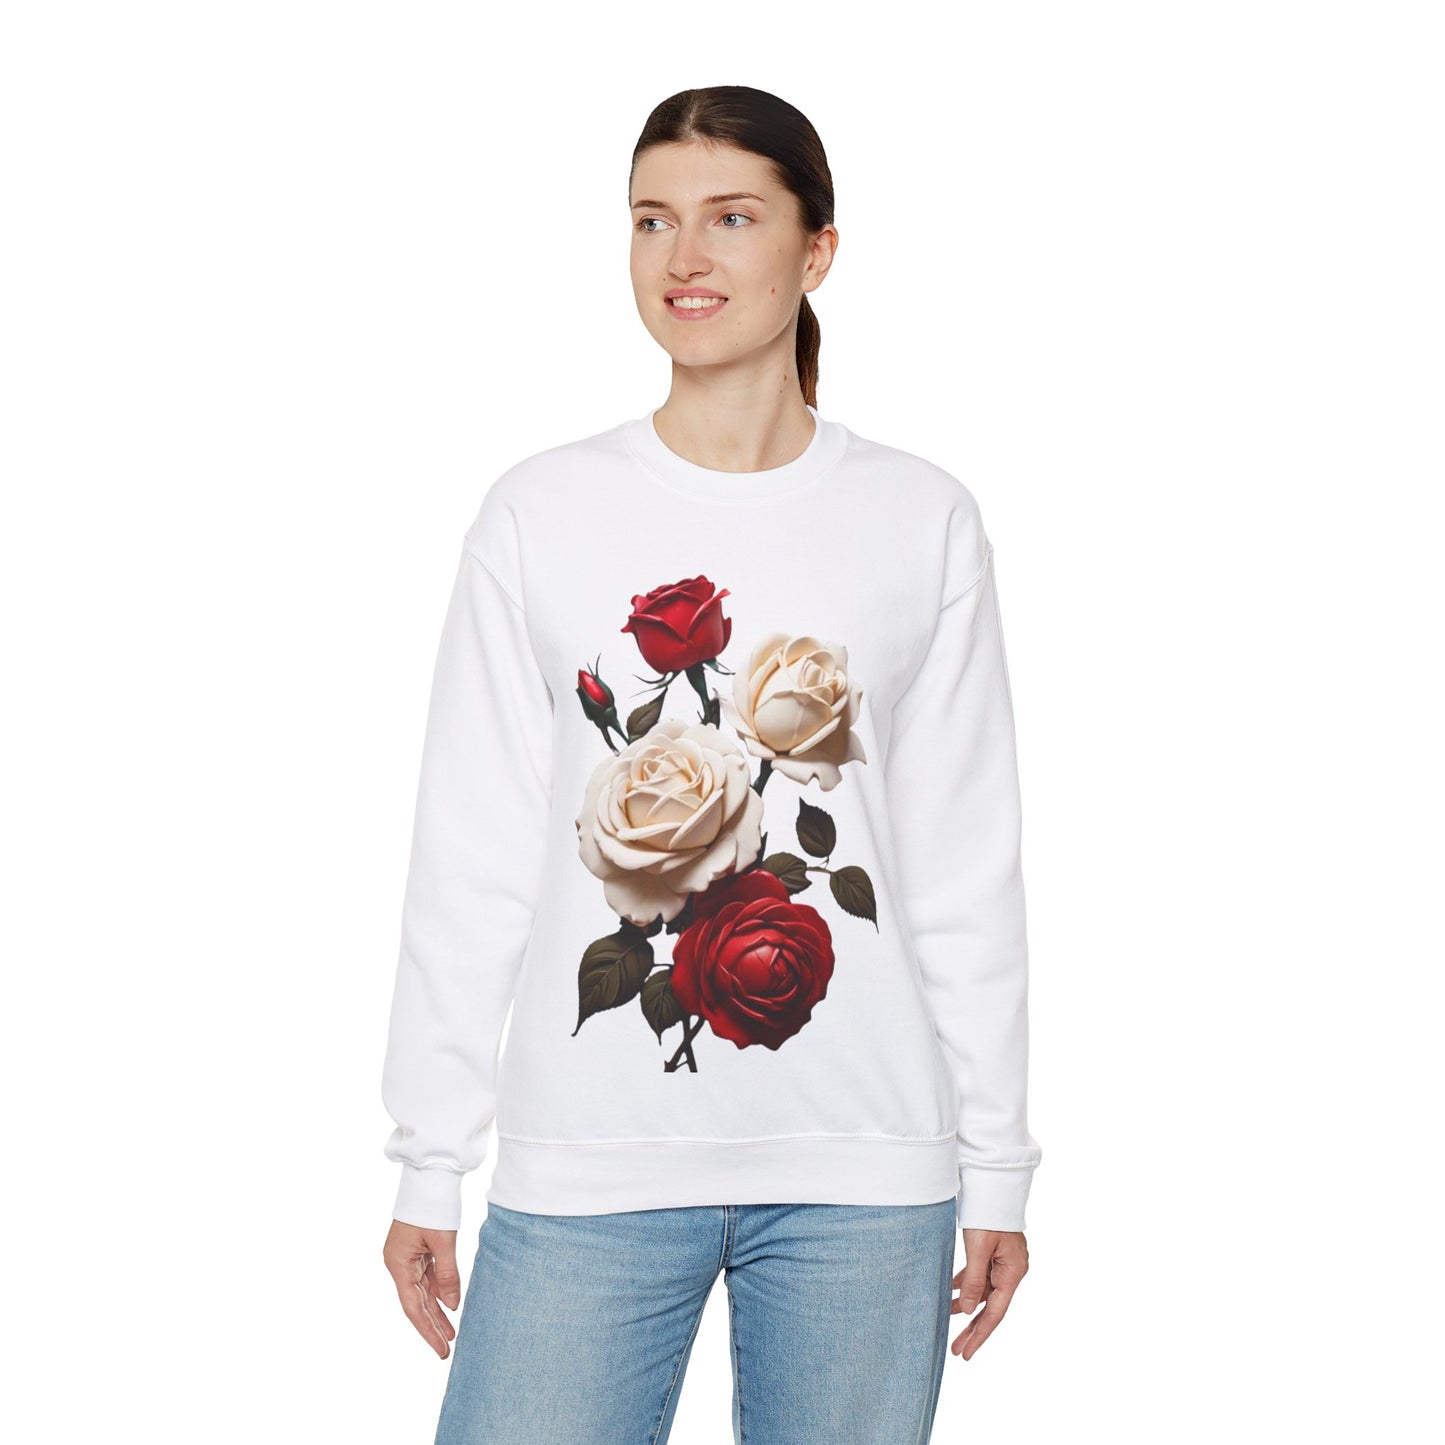 Red and White Roses - Unisex Crewneck Sweatshirt